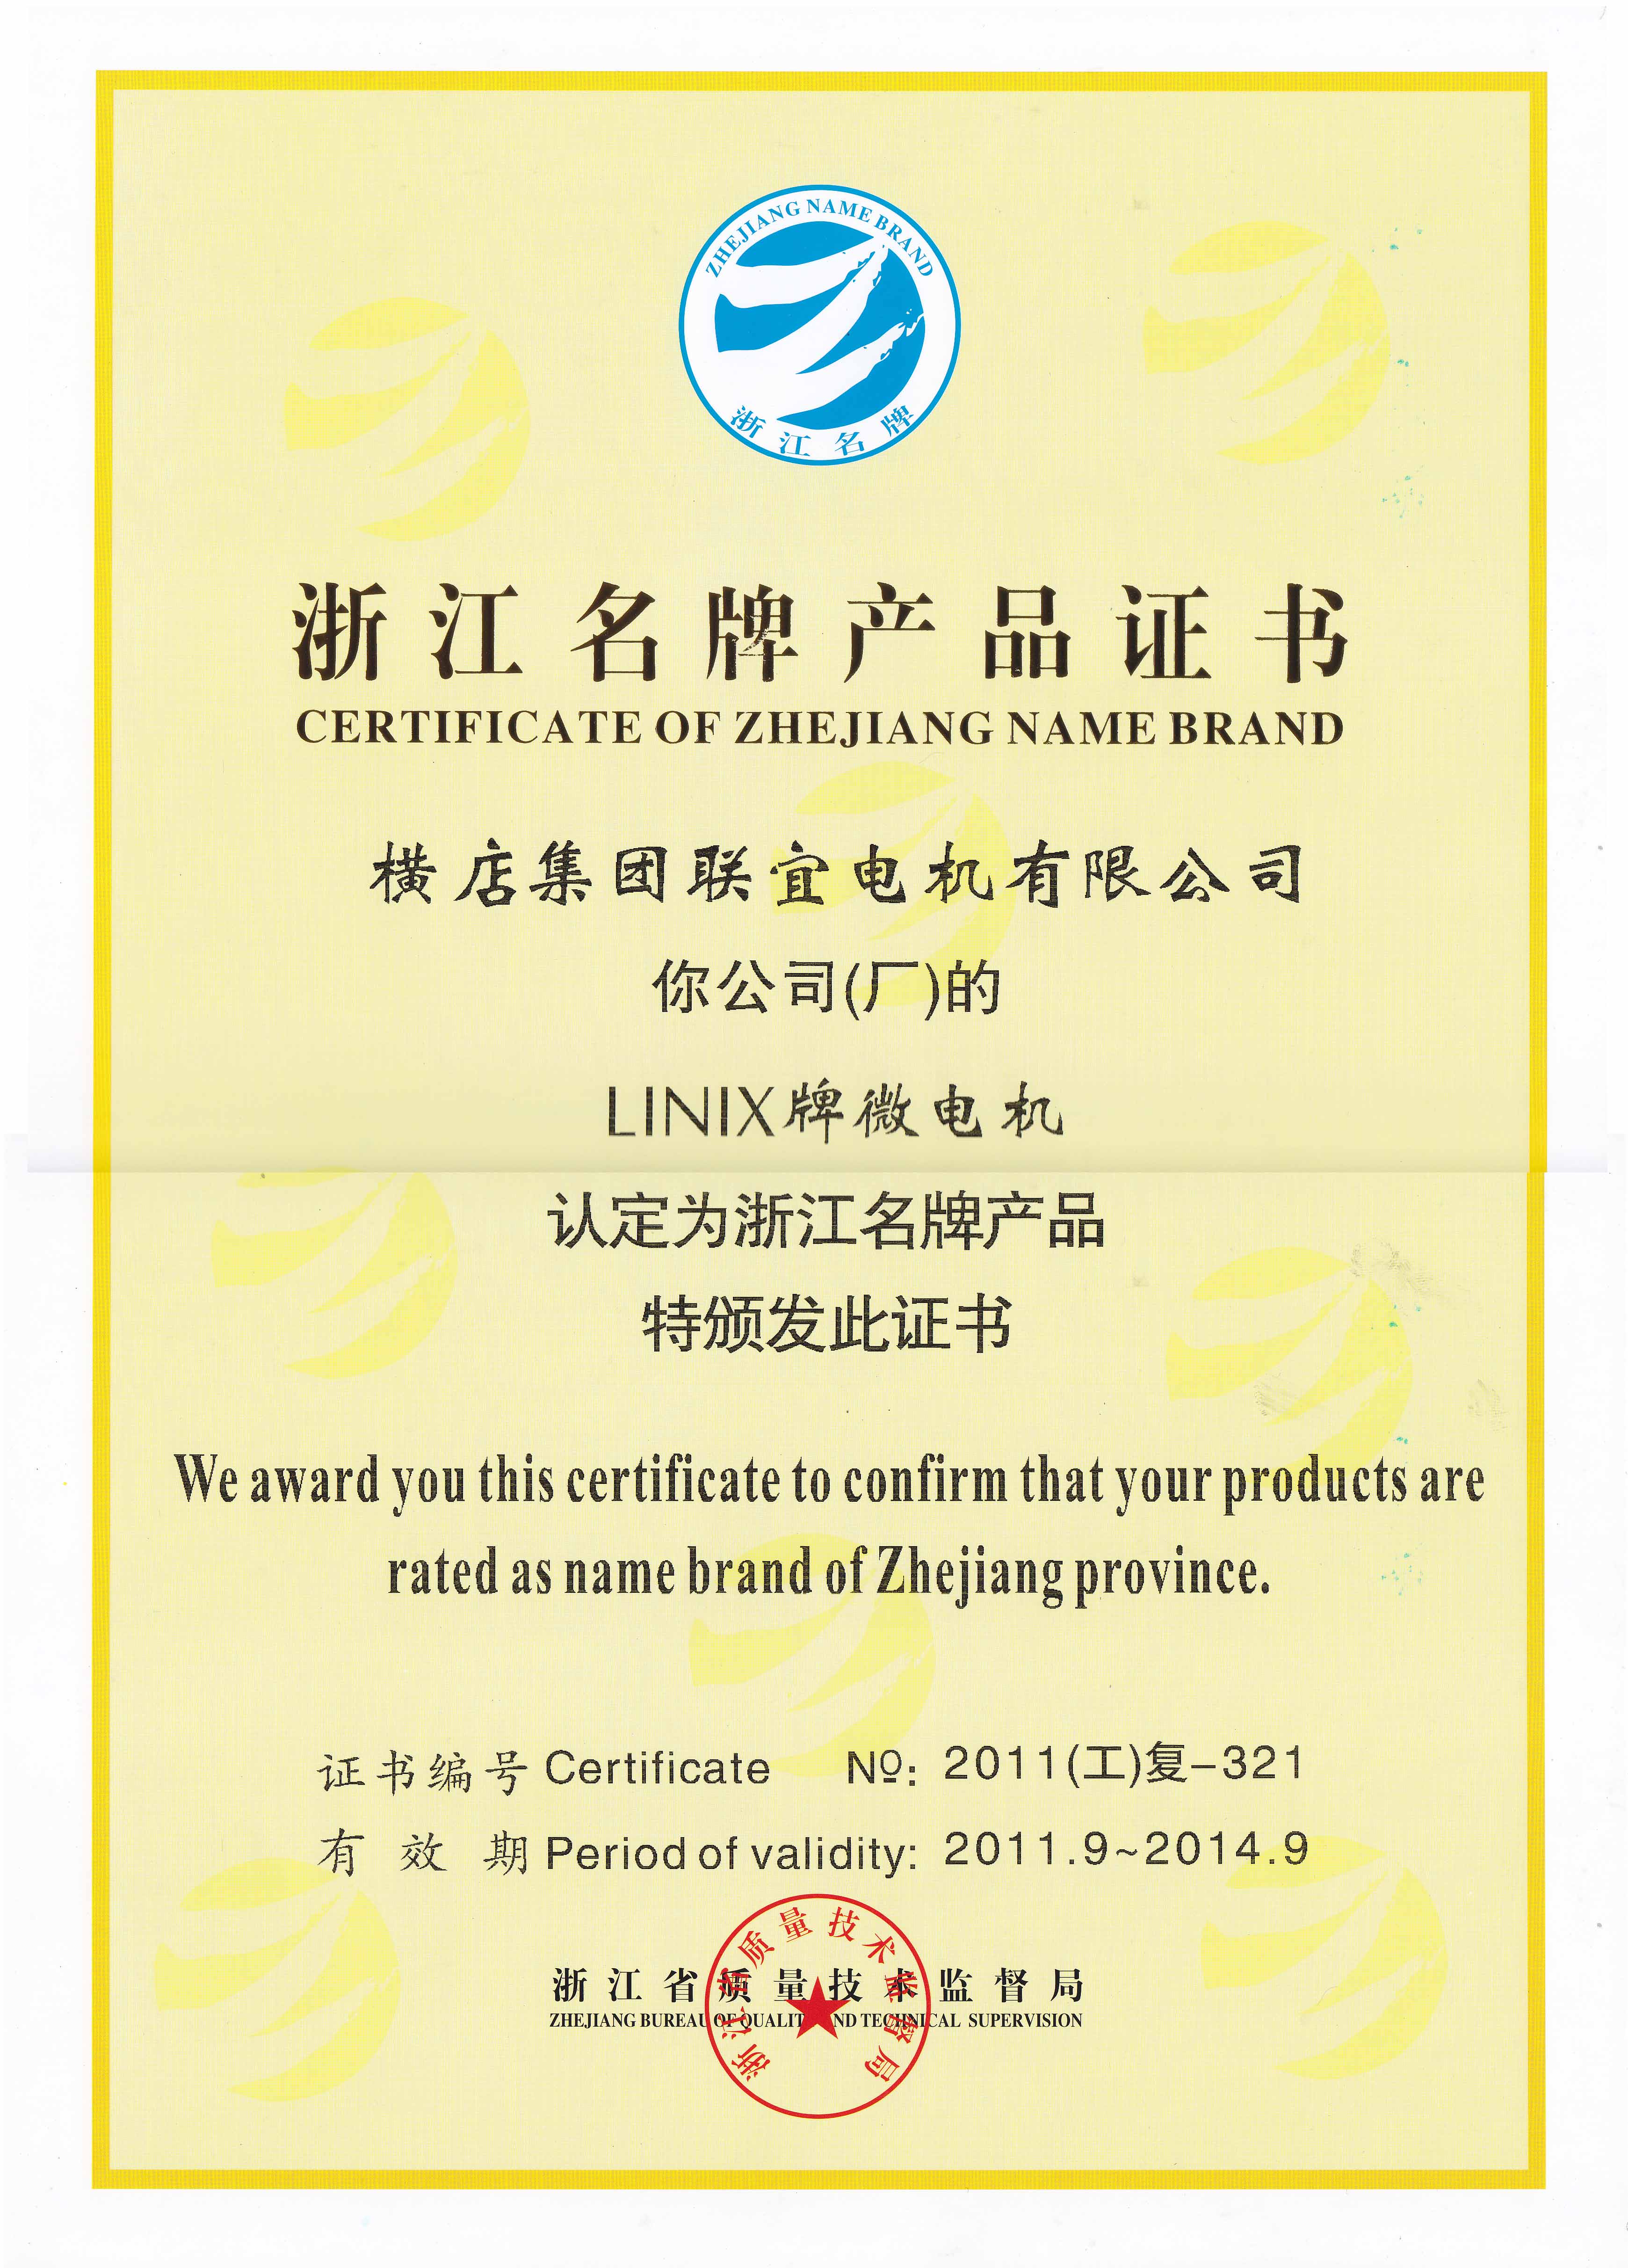 Zhejiang famous brand product certificate - linix micromotor